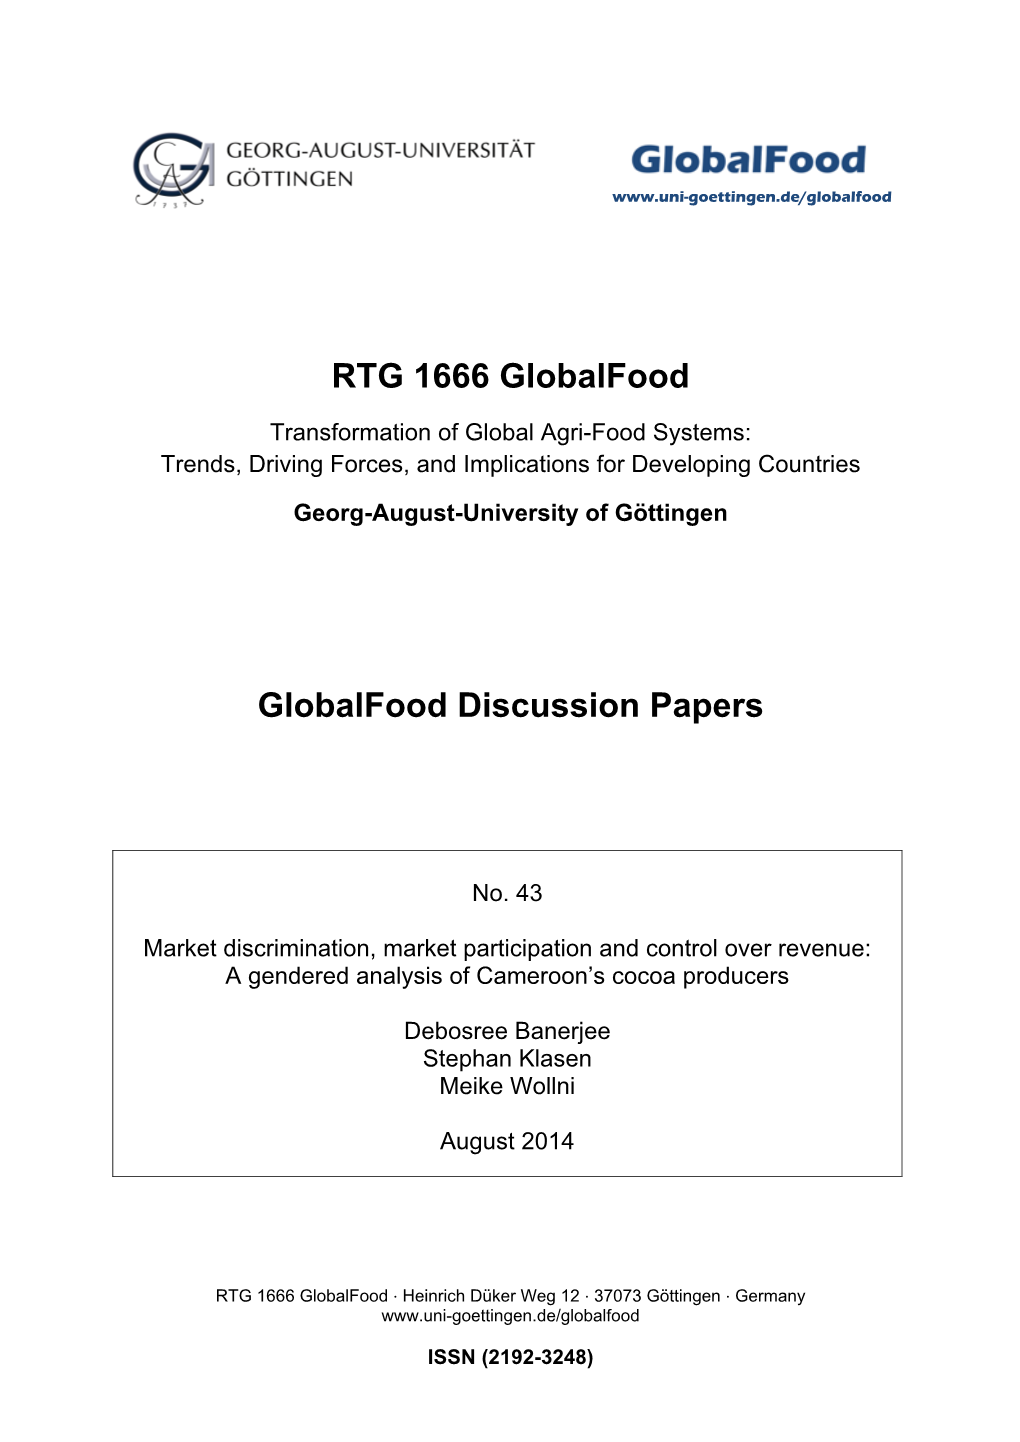 RTG 1666 Globalfood